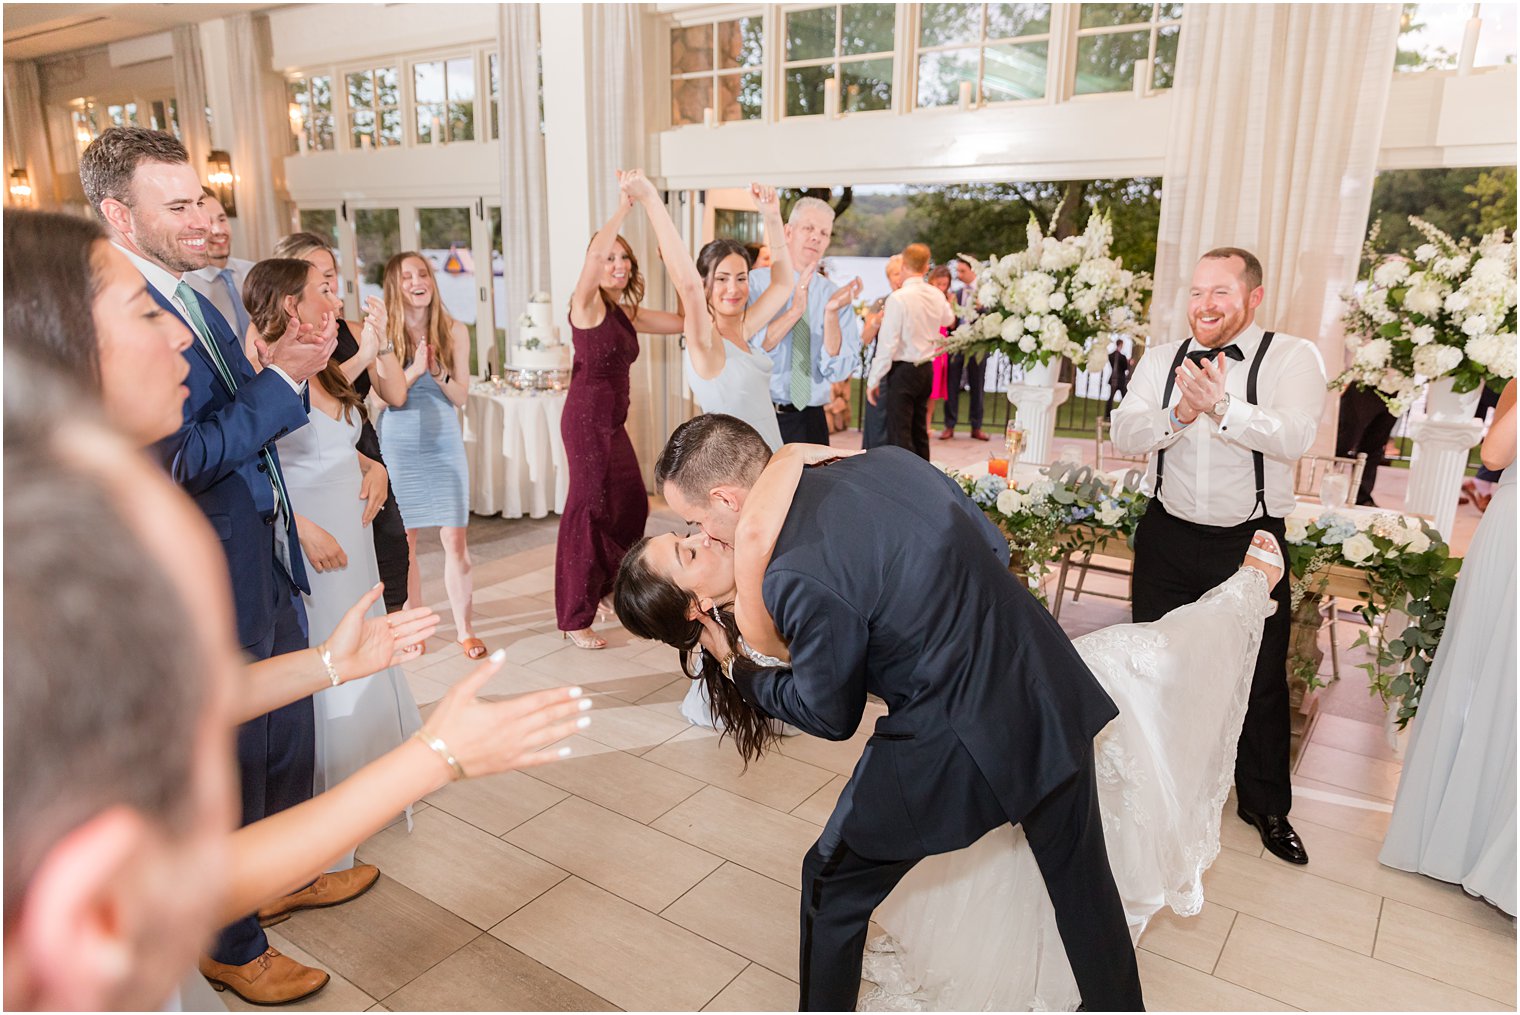 groom dips bride kissing her during NJ wedding reception dance floor